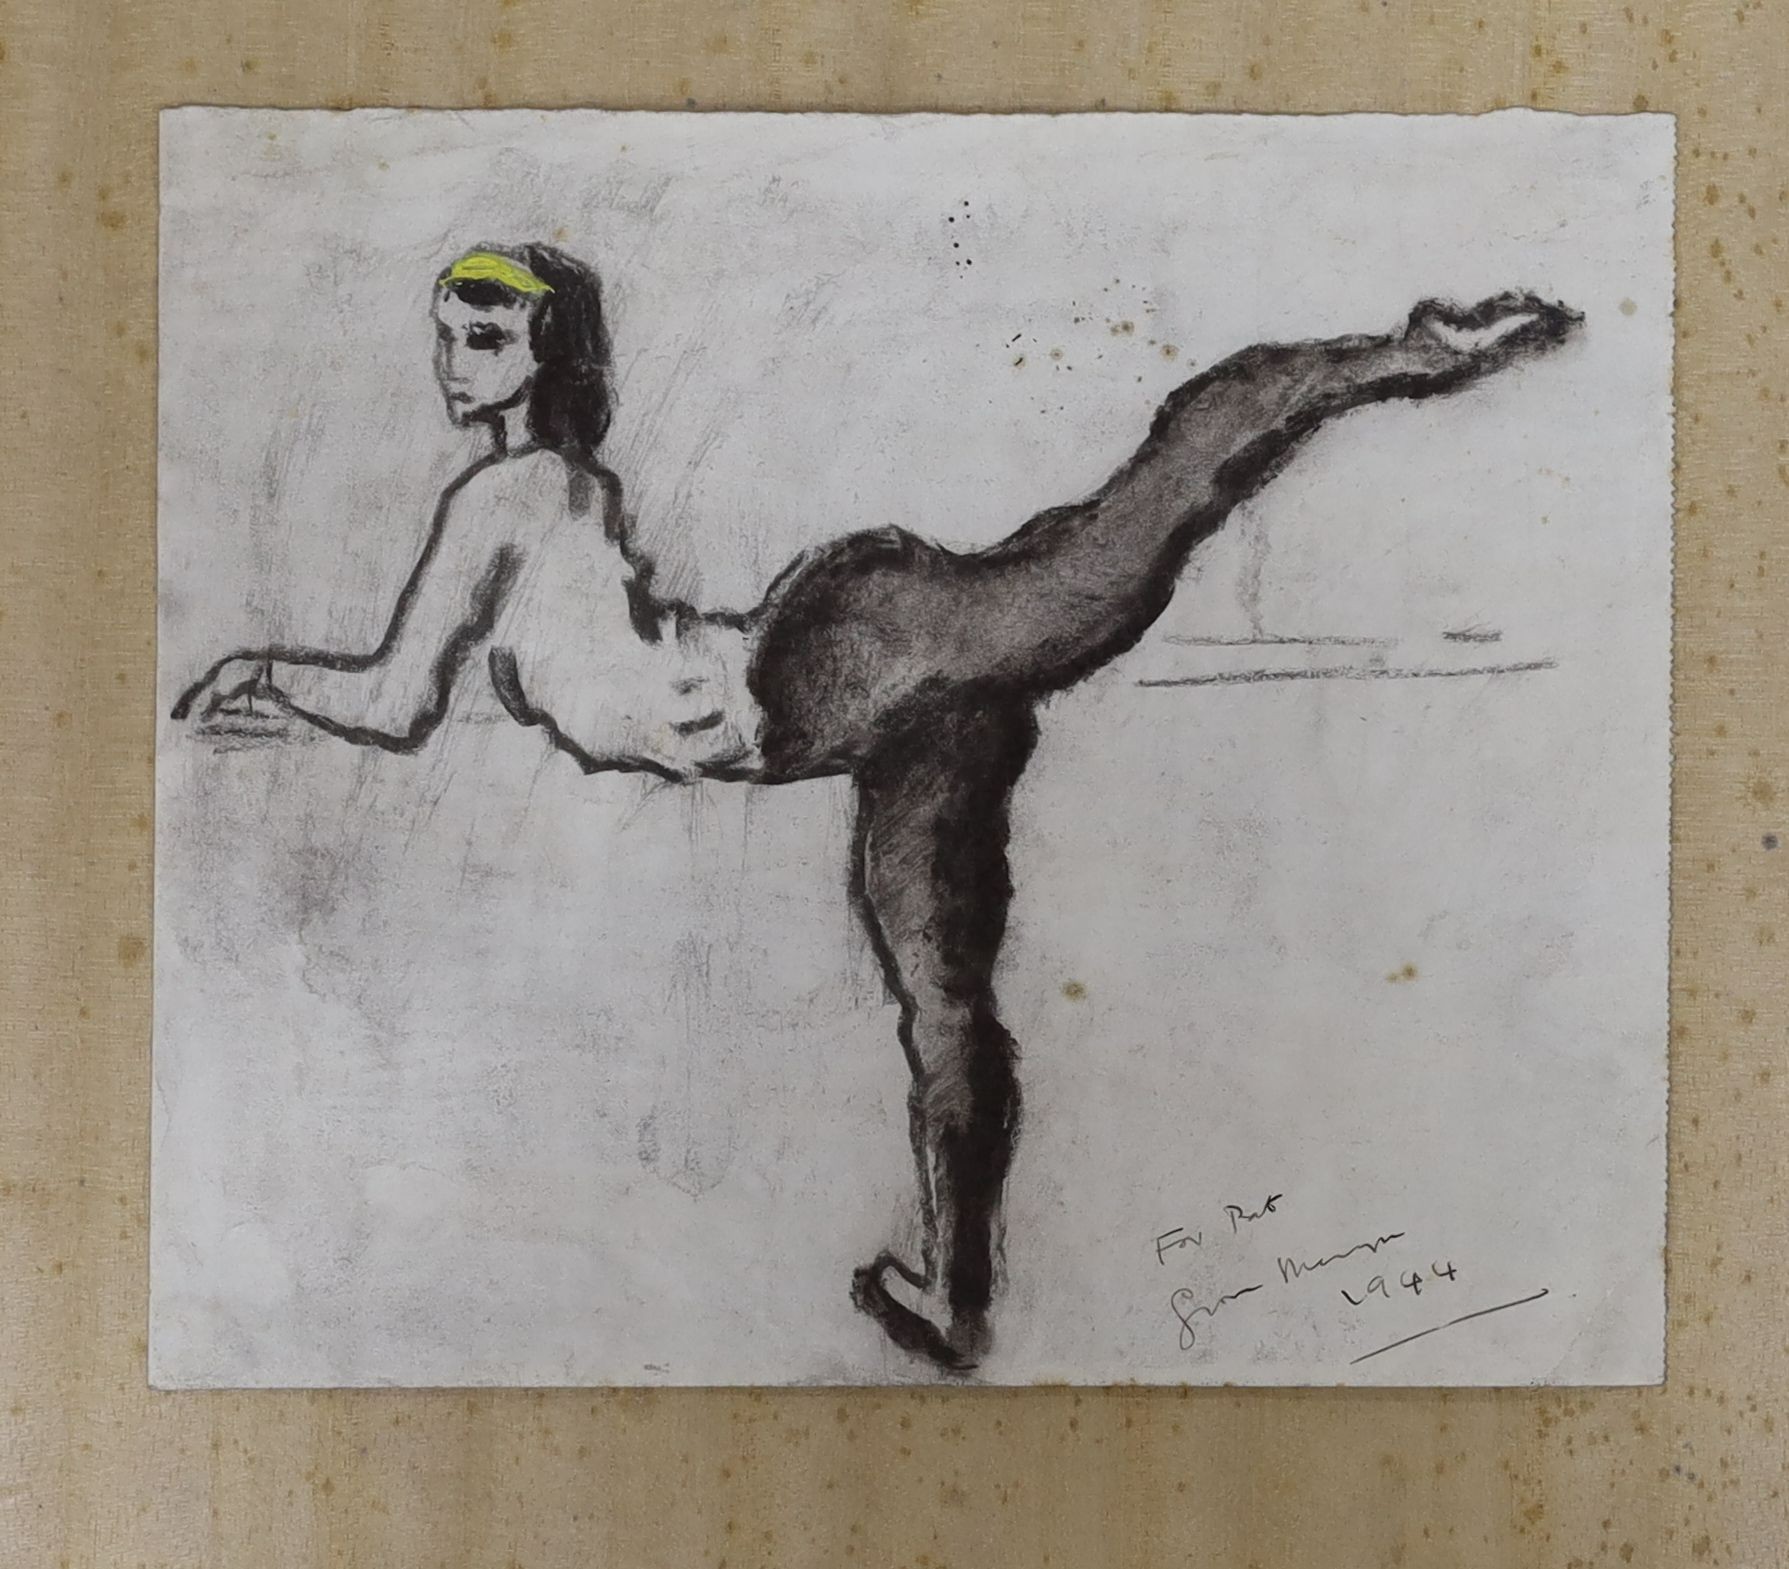 Mervyn Peake (1911-1968), charcoal and oil on paper, Sketch of a ballet dancer, inscribed 'For Pat from Mervyn 1944', 20 x 24cm, unframed